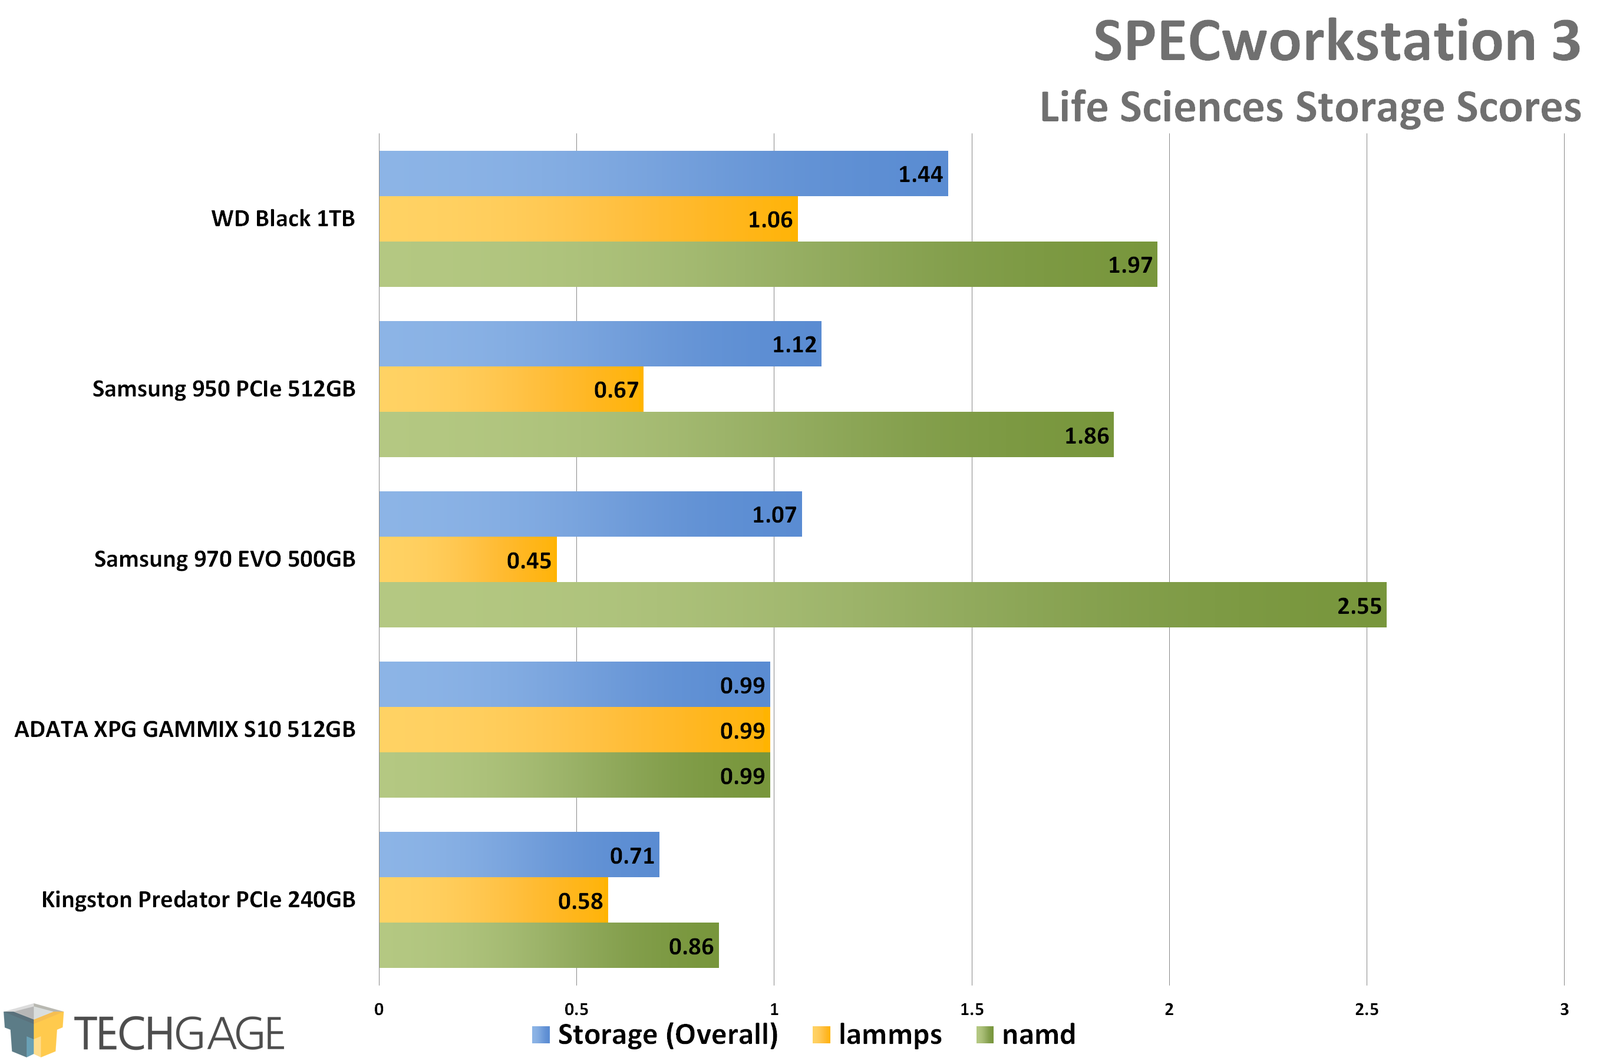 SPECworkstation 3 - Life Sciences Storage Scores